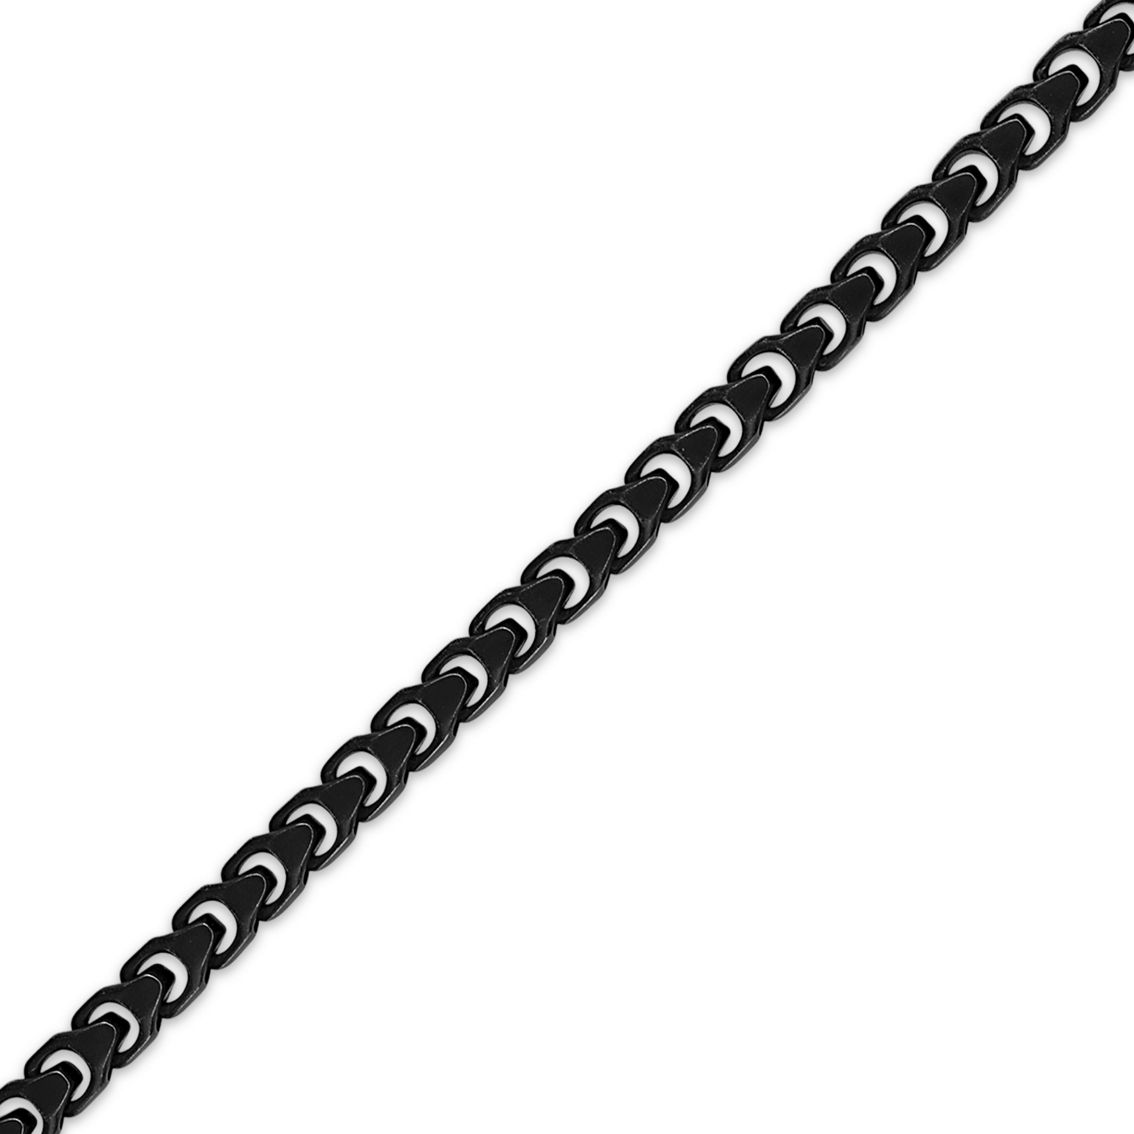 Bulova Link Stainless Steel Blacktone Bracelet - Image 2 of 3